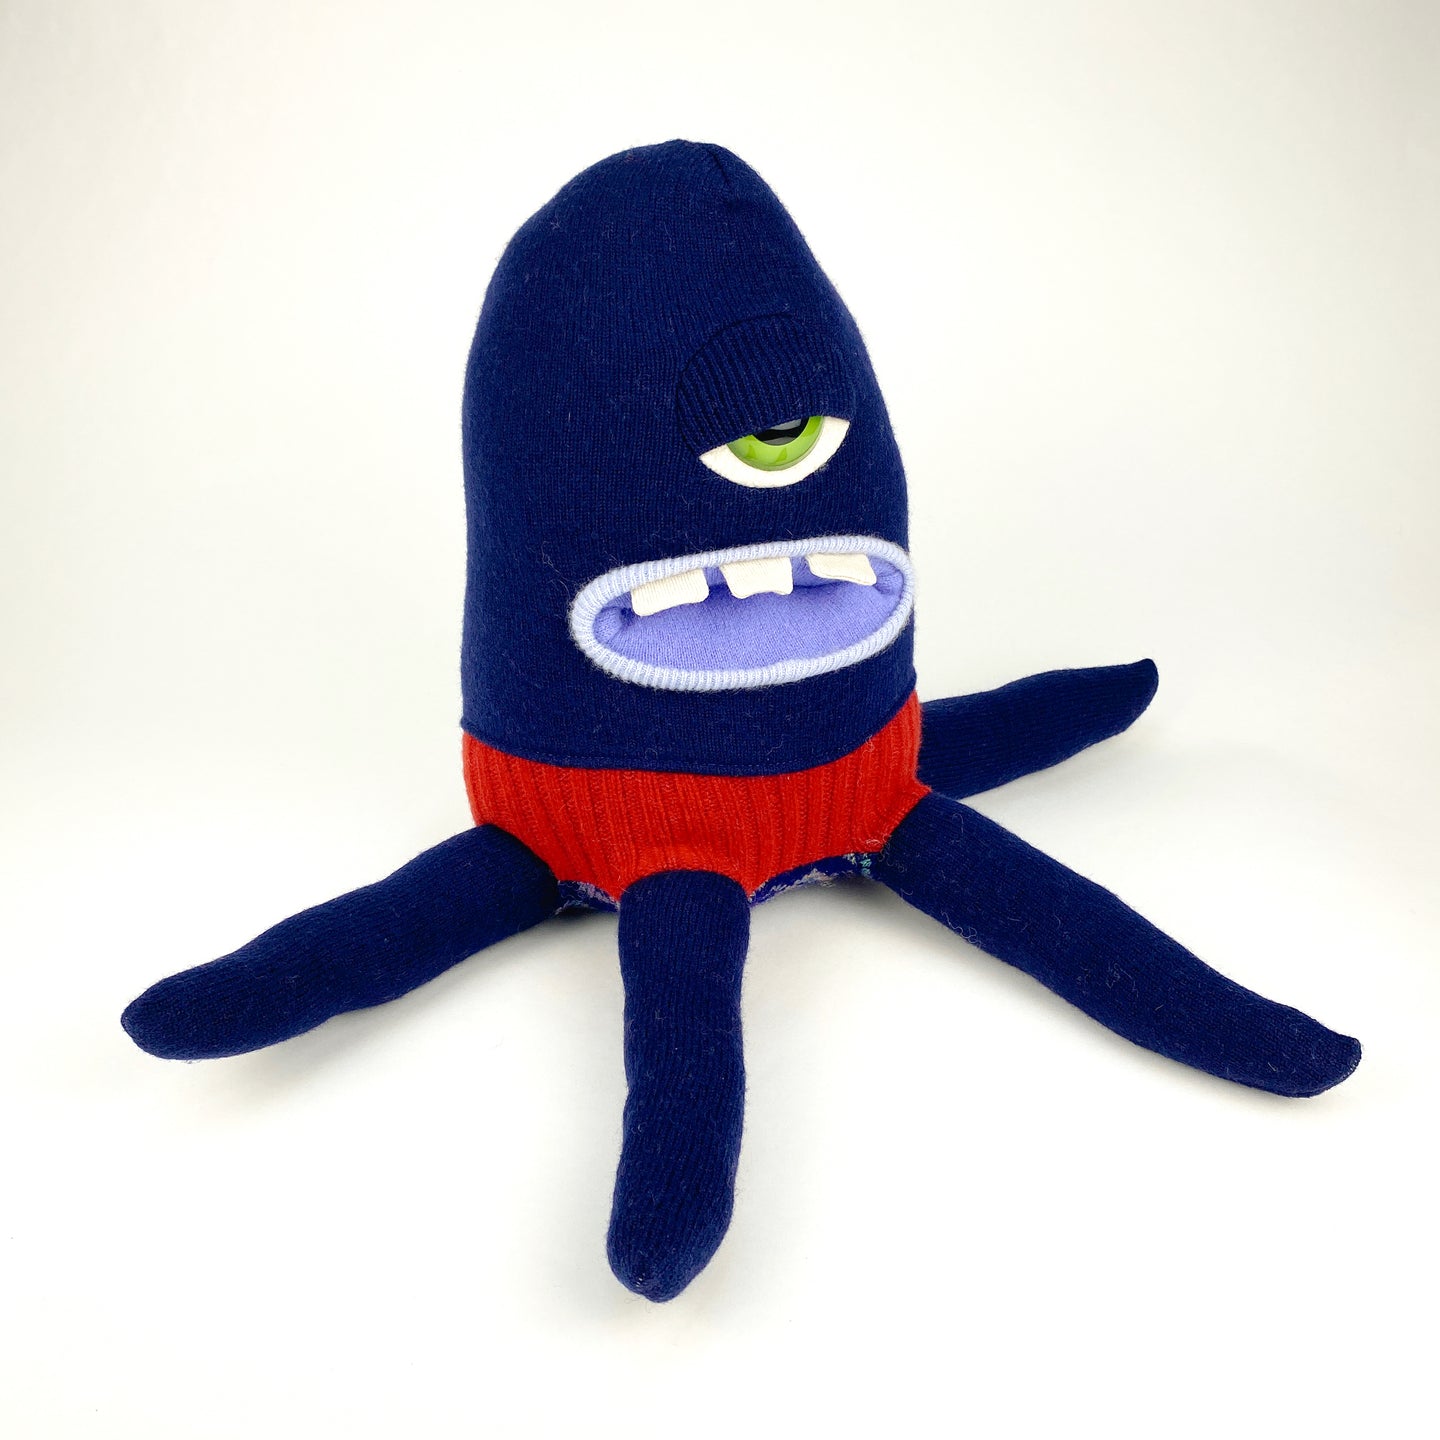 Salvatore the plush octopus style my friend monster™ wool sweater stuffy